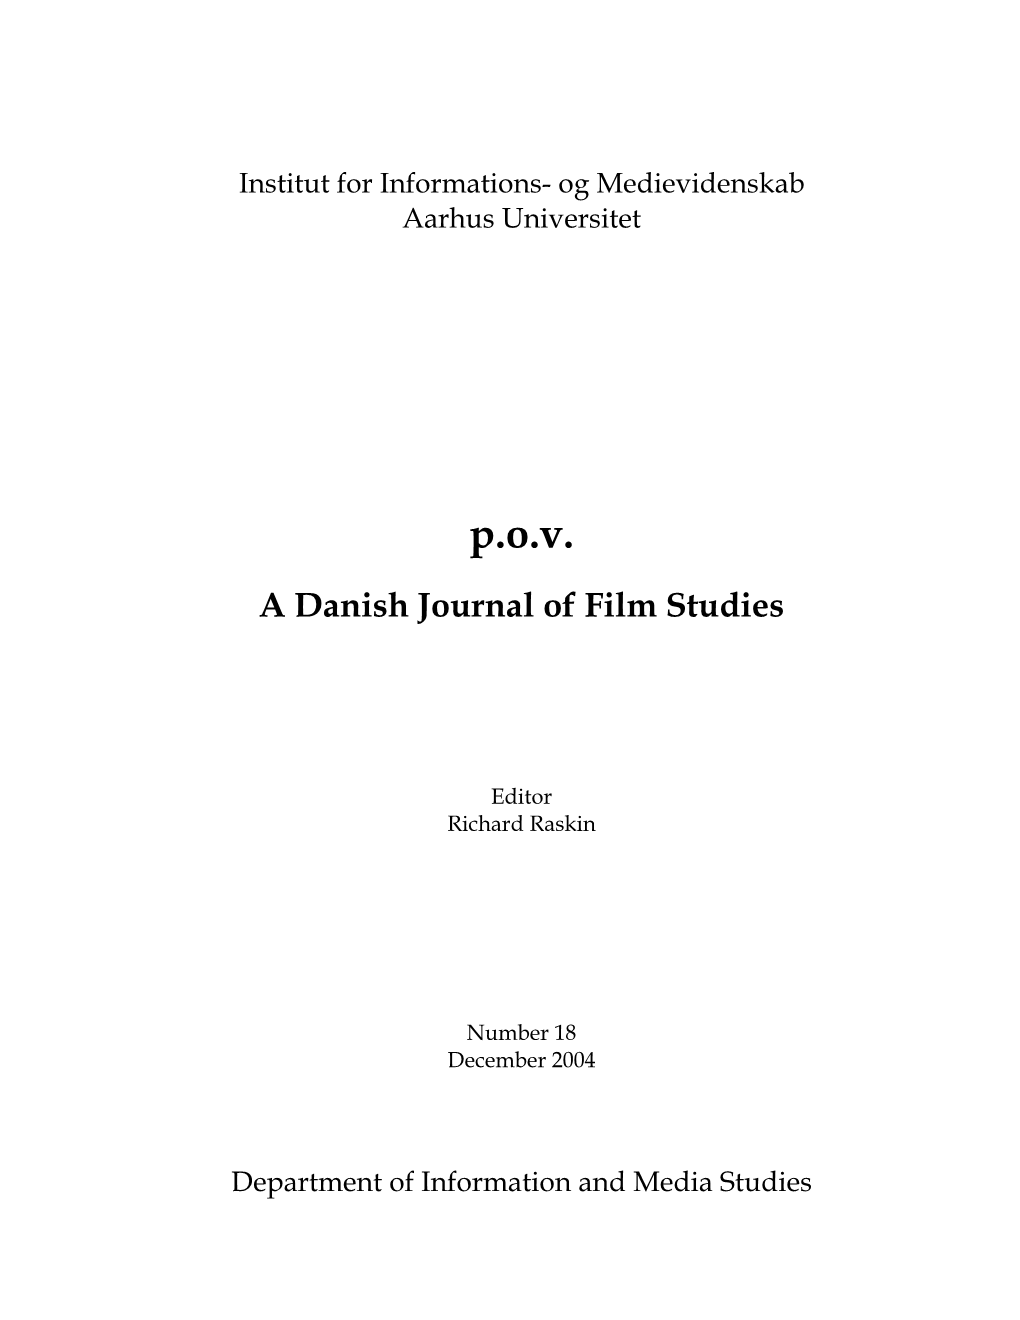 Pov a Danish Journal of Film Studies